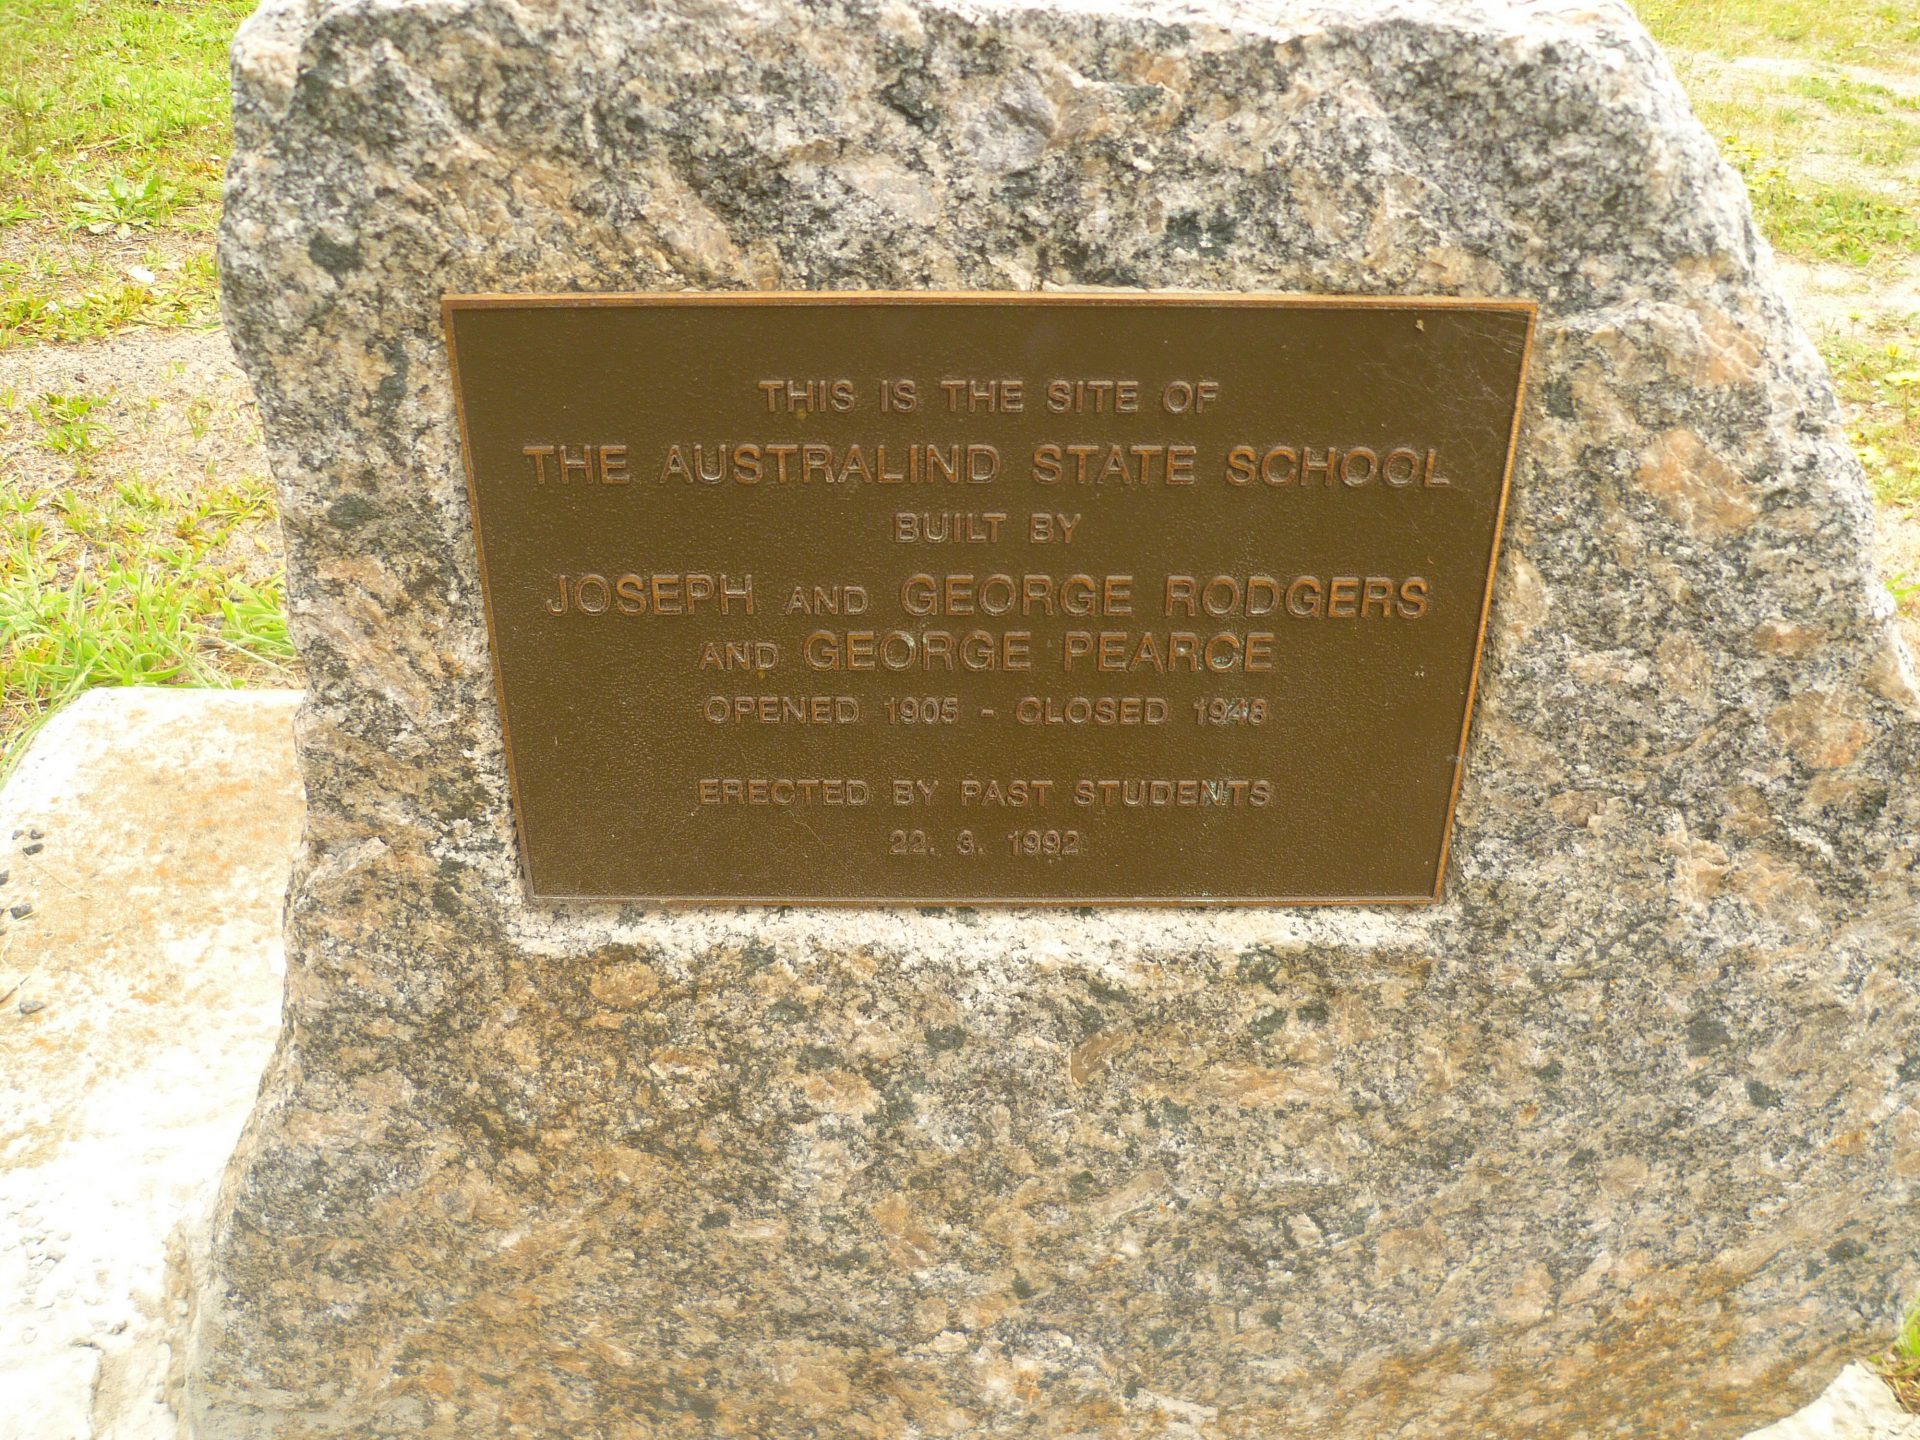 Australind-State-School-Plaque-1920x1440.jpg